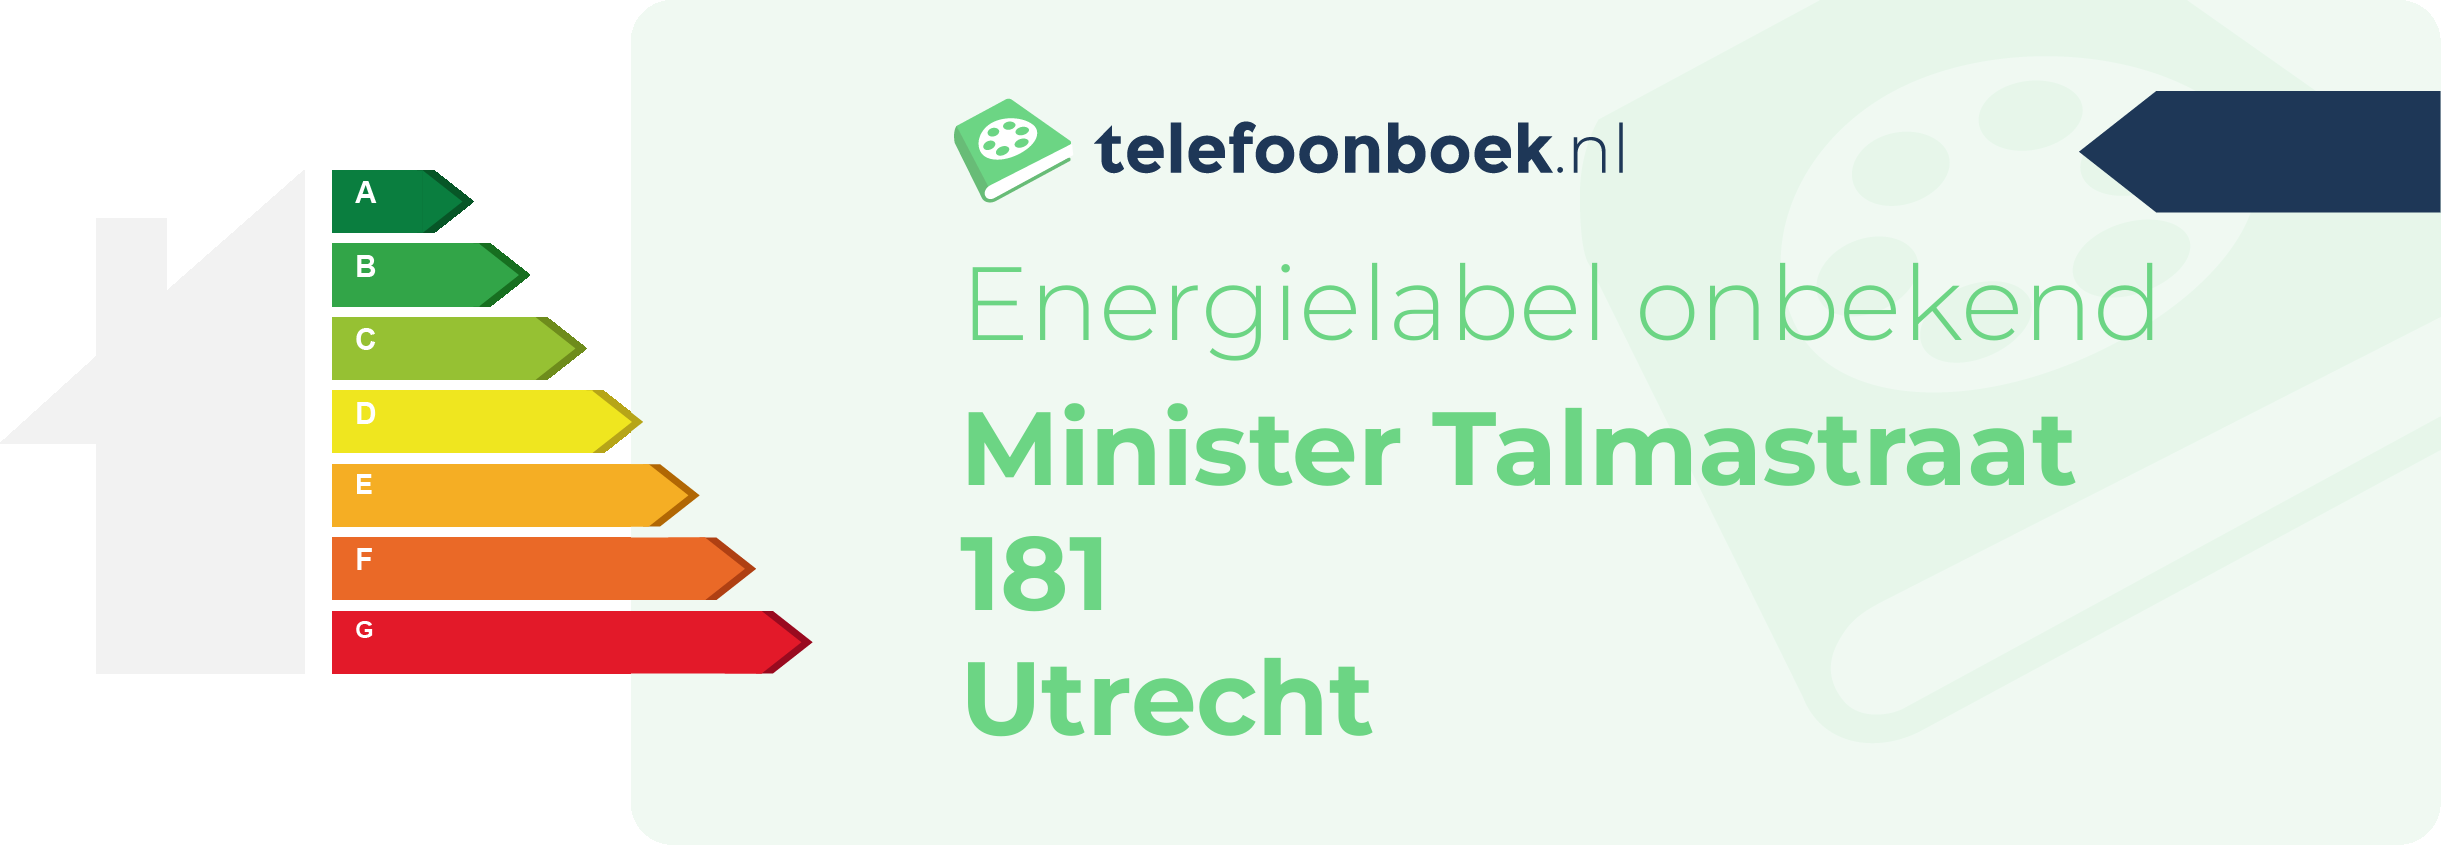 Energielabel Minister Talmastraat 181 Utrecht